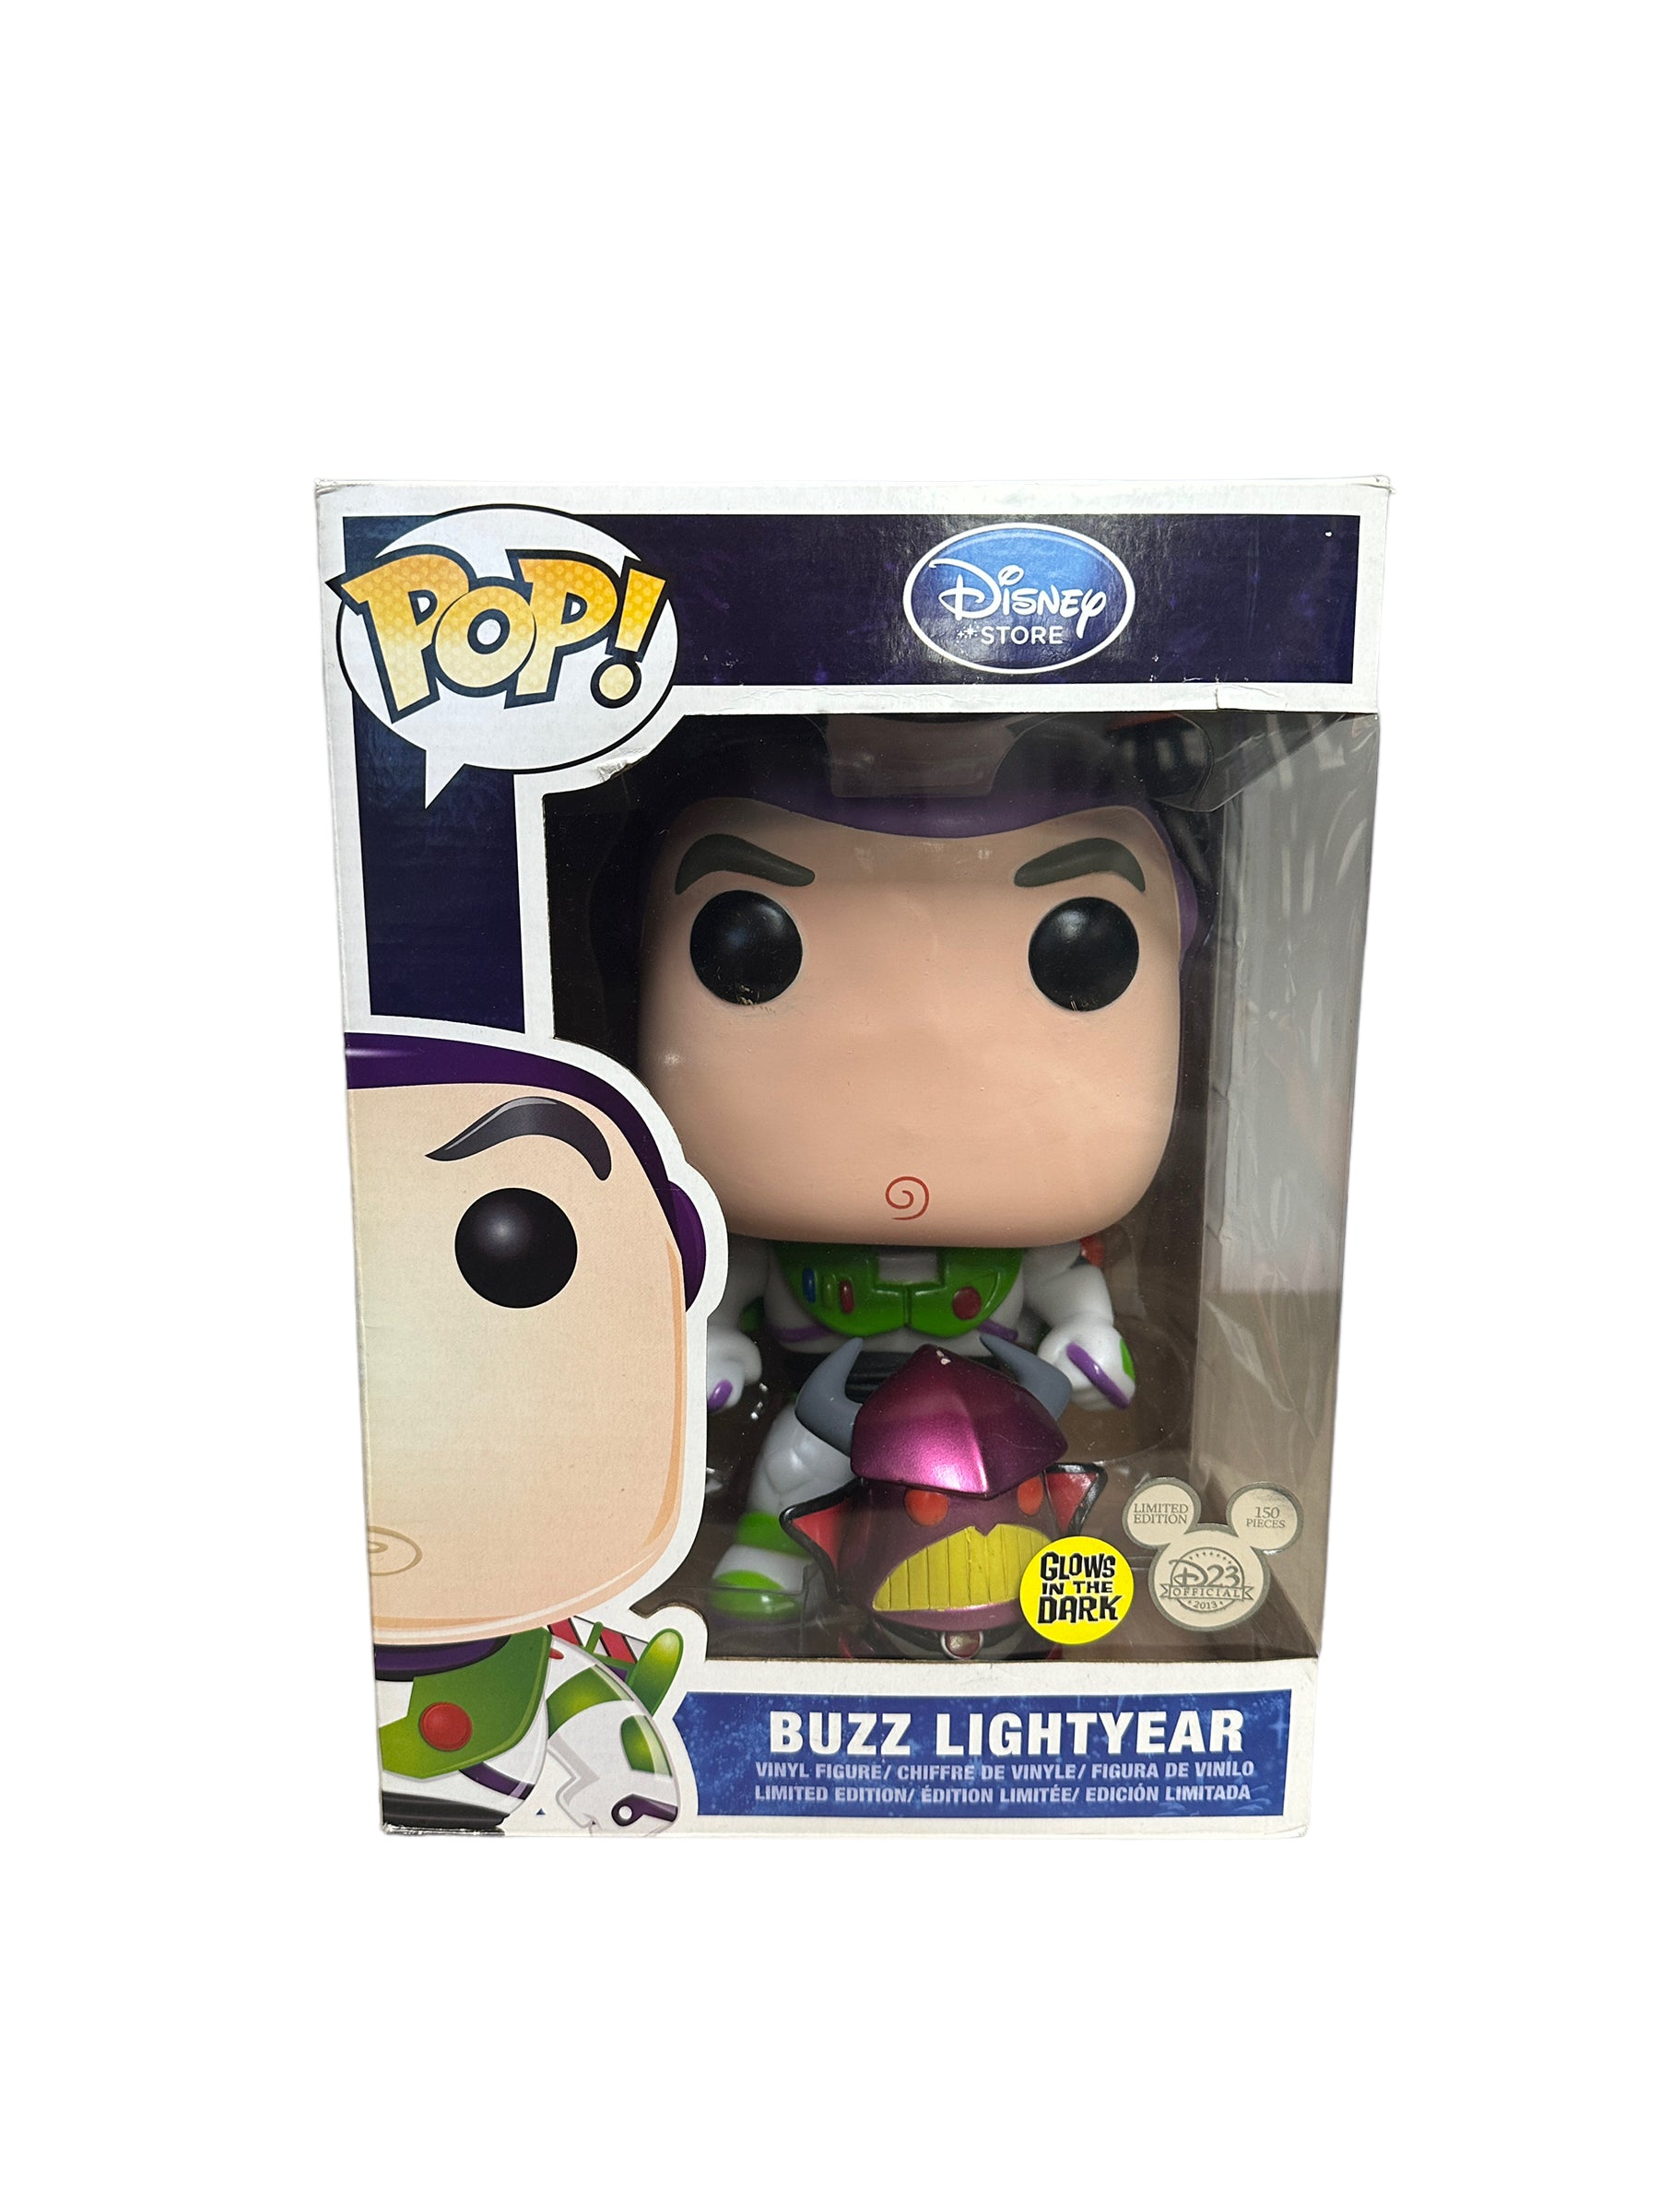 Buzz Lightyear w/ Emperor Zurg (Glow in the Dark) 9" Funko Pop! - Disney - D23 Expo 2013 Exclusive LE150 Pcs - Condition 7/10